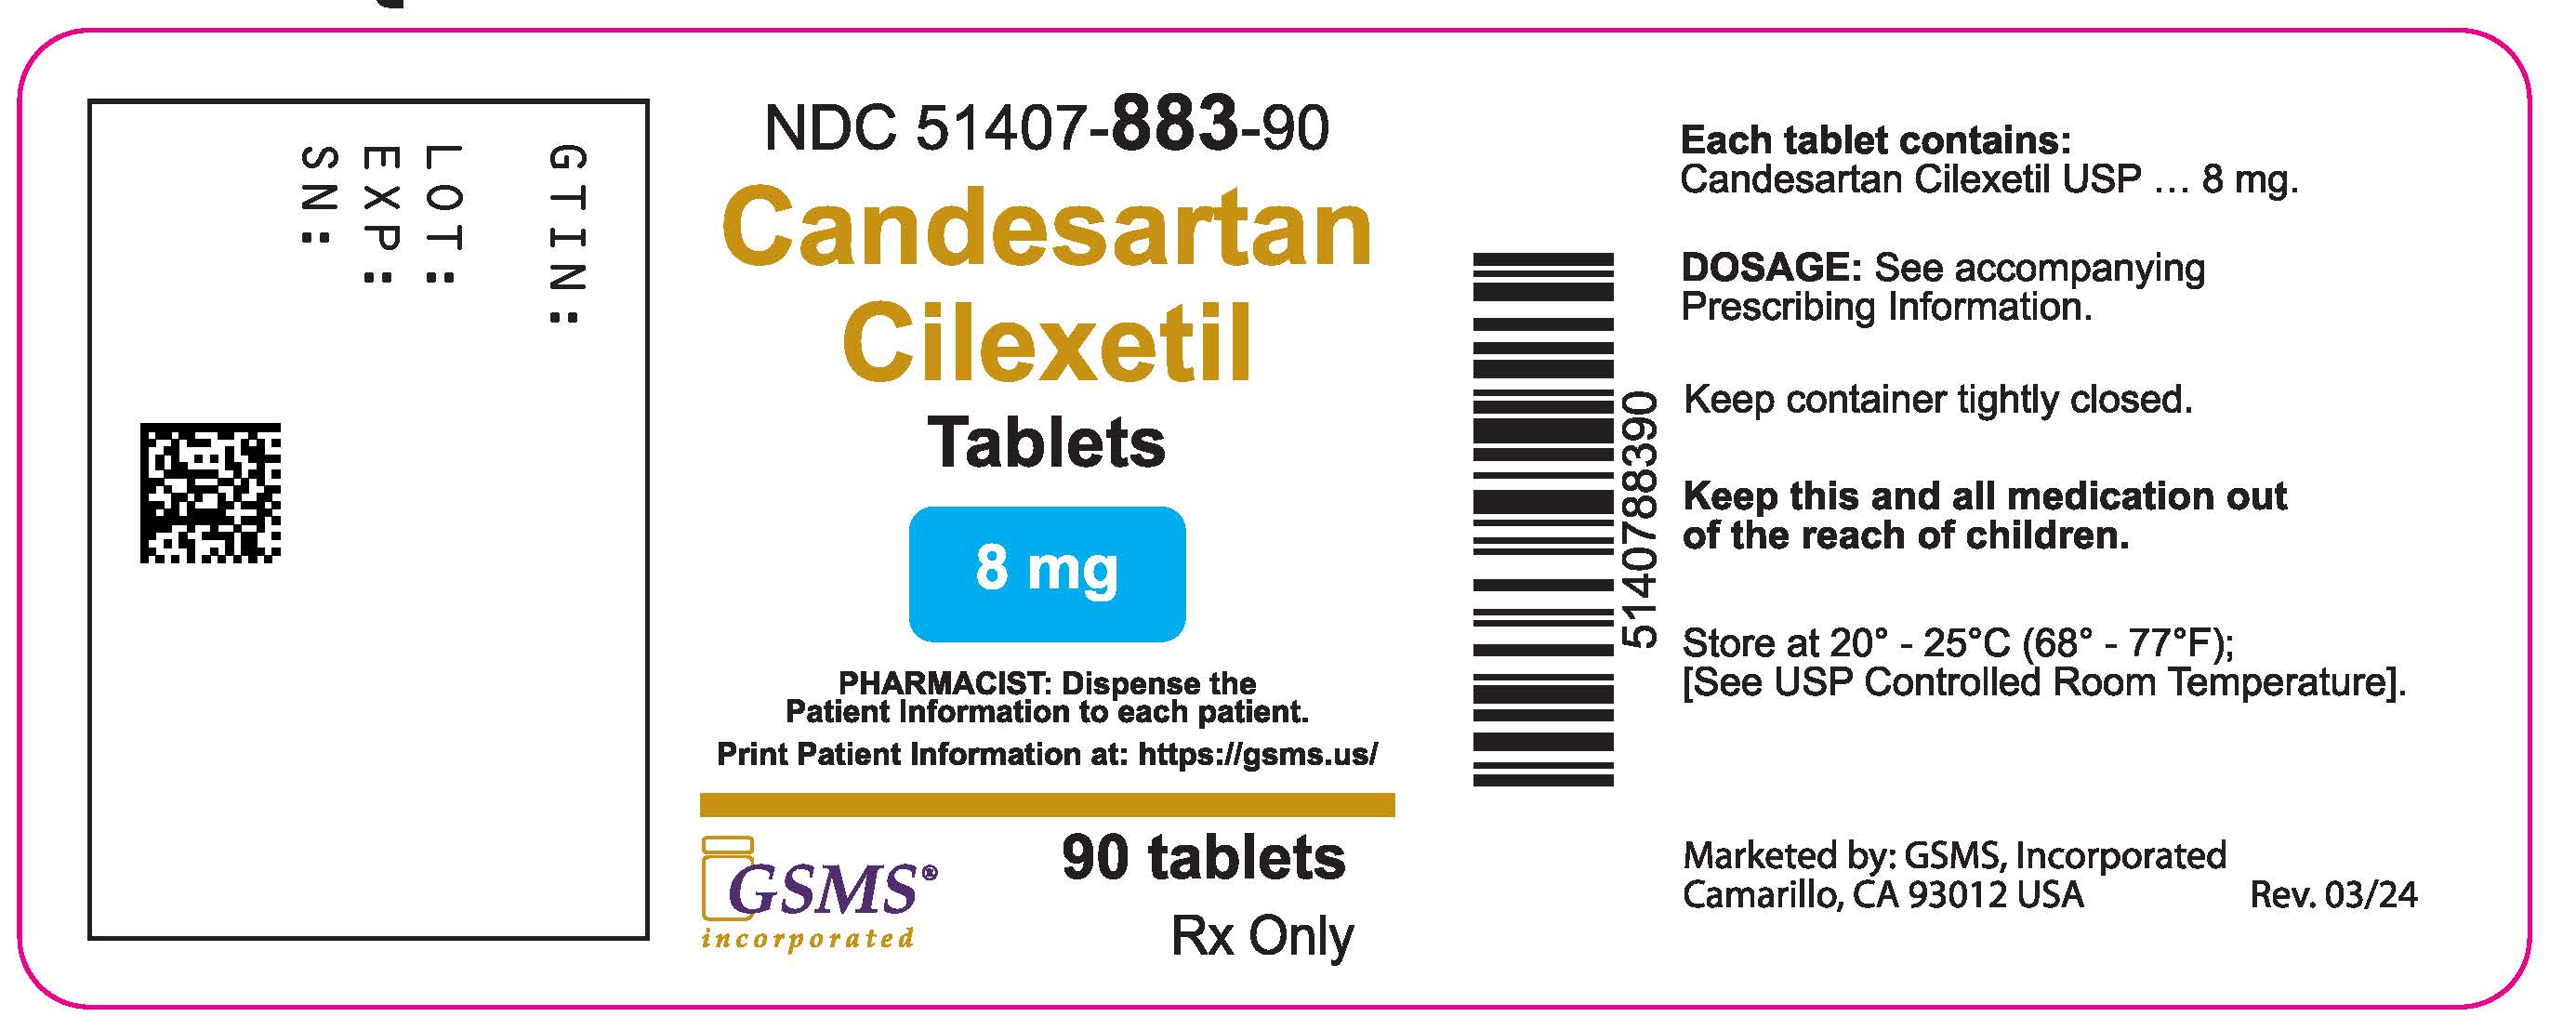 51407-883-90 - Candesartan Cilexetil 8 mg - Rev. 0324.jpg